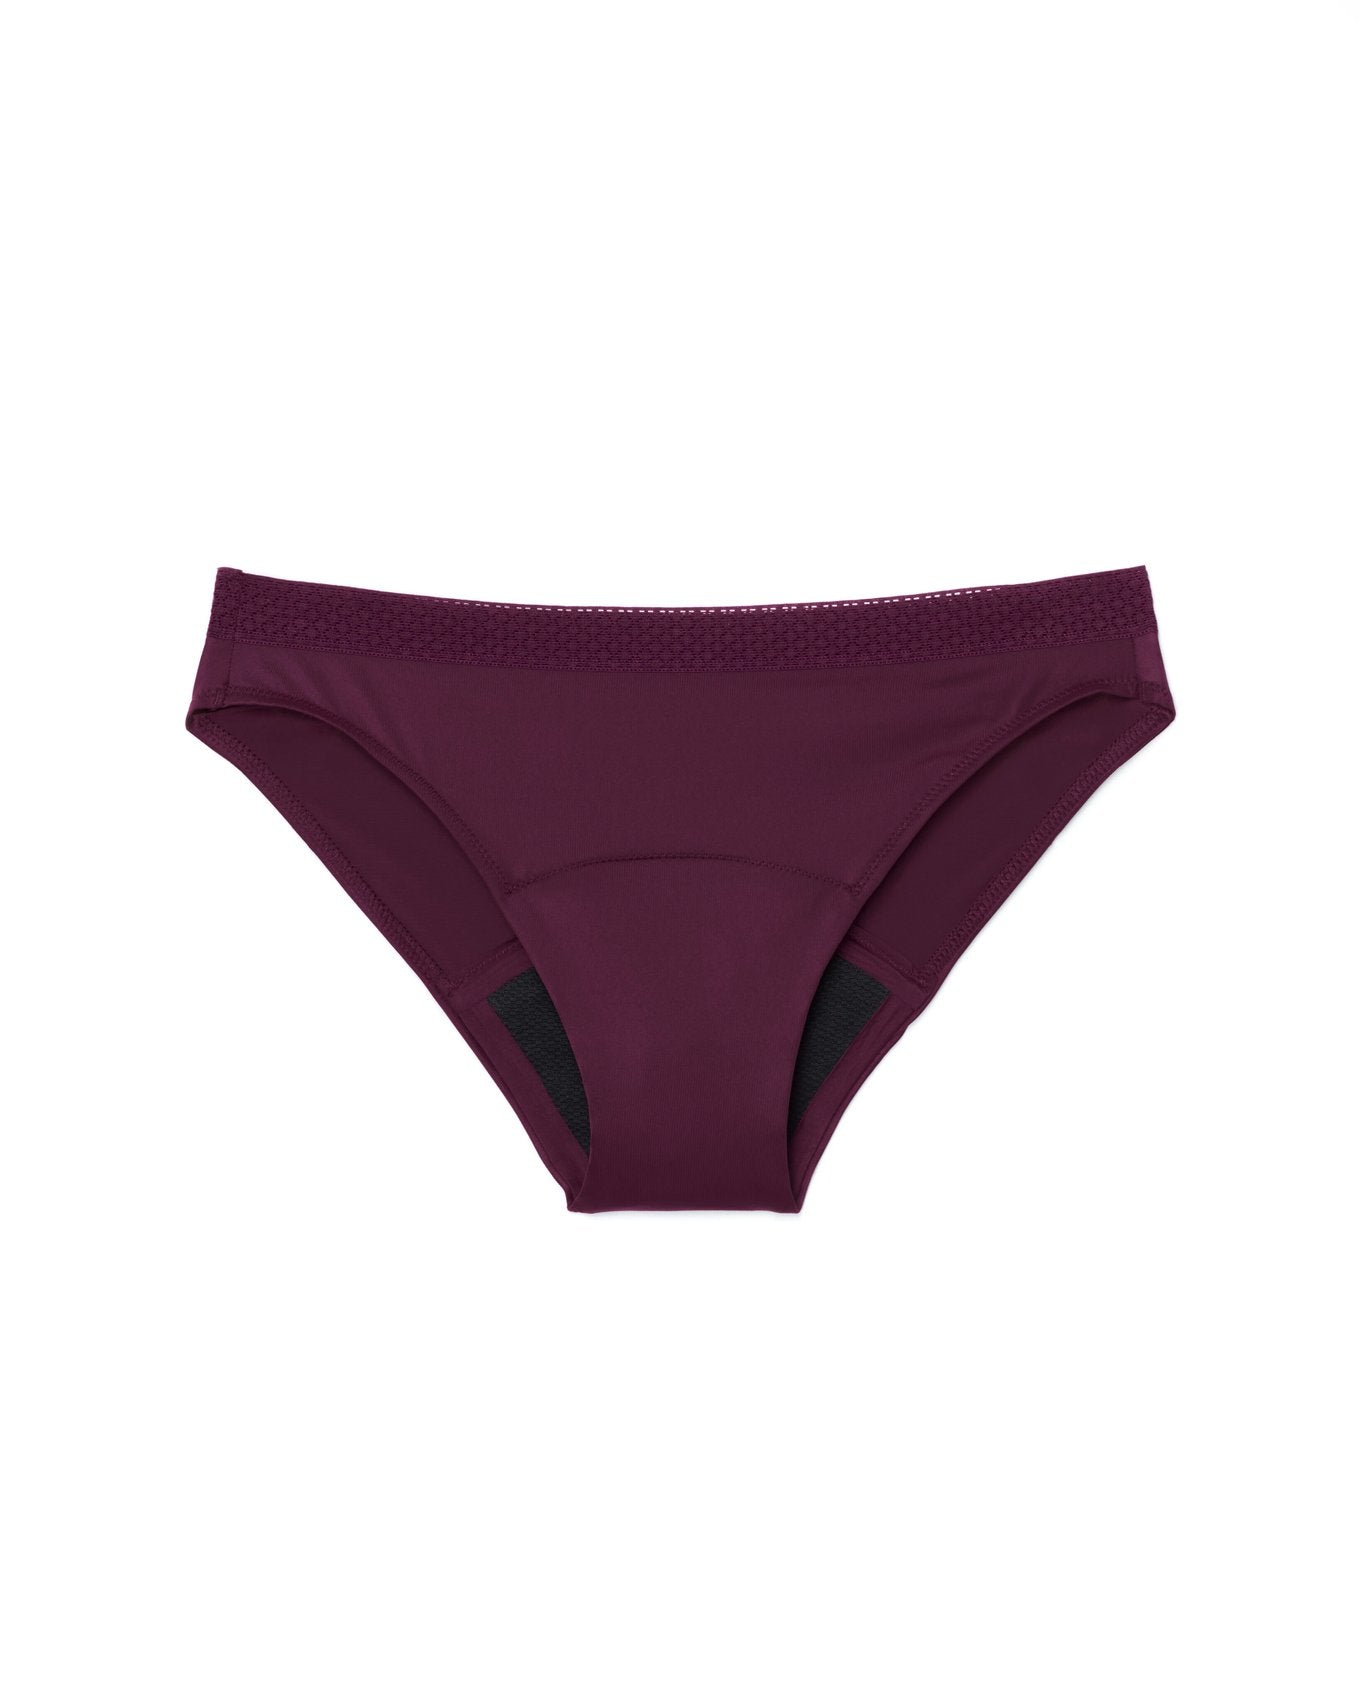 Joyja Katelin period-proof panty in color Potent Purple and shape bikini